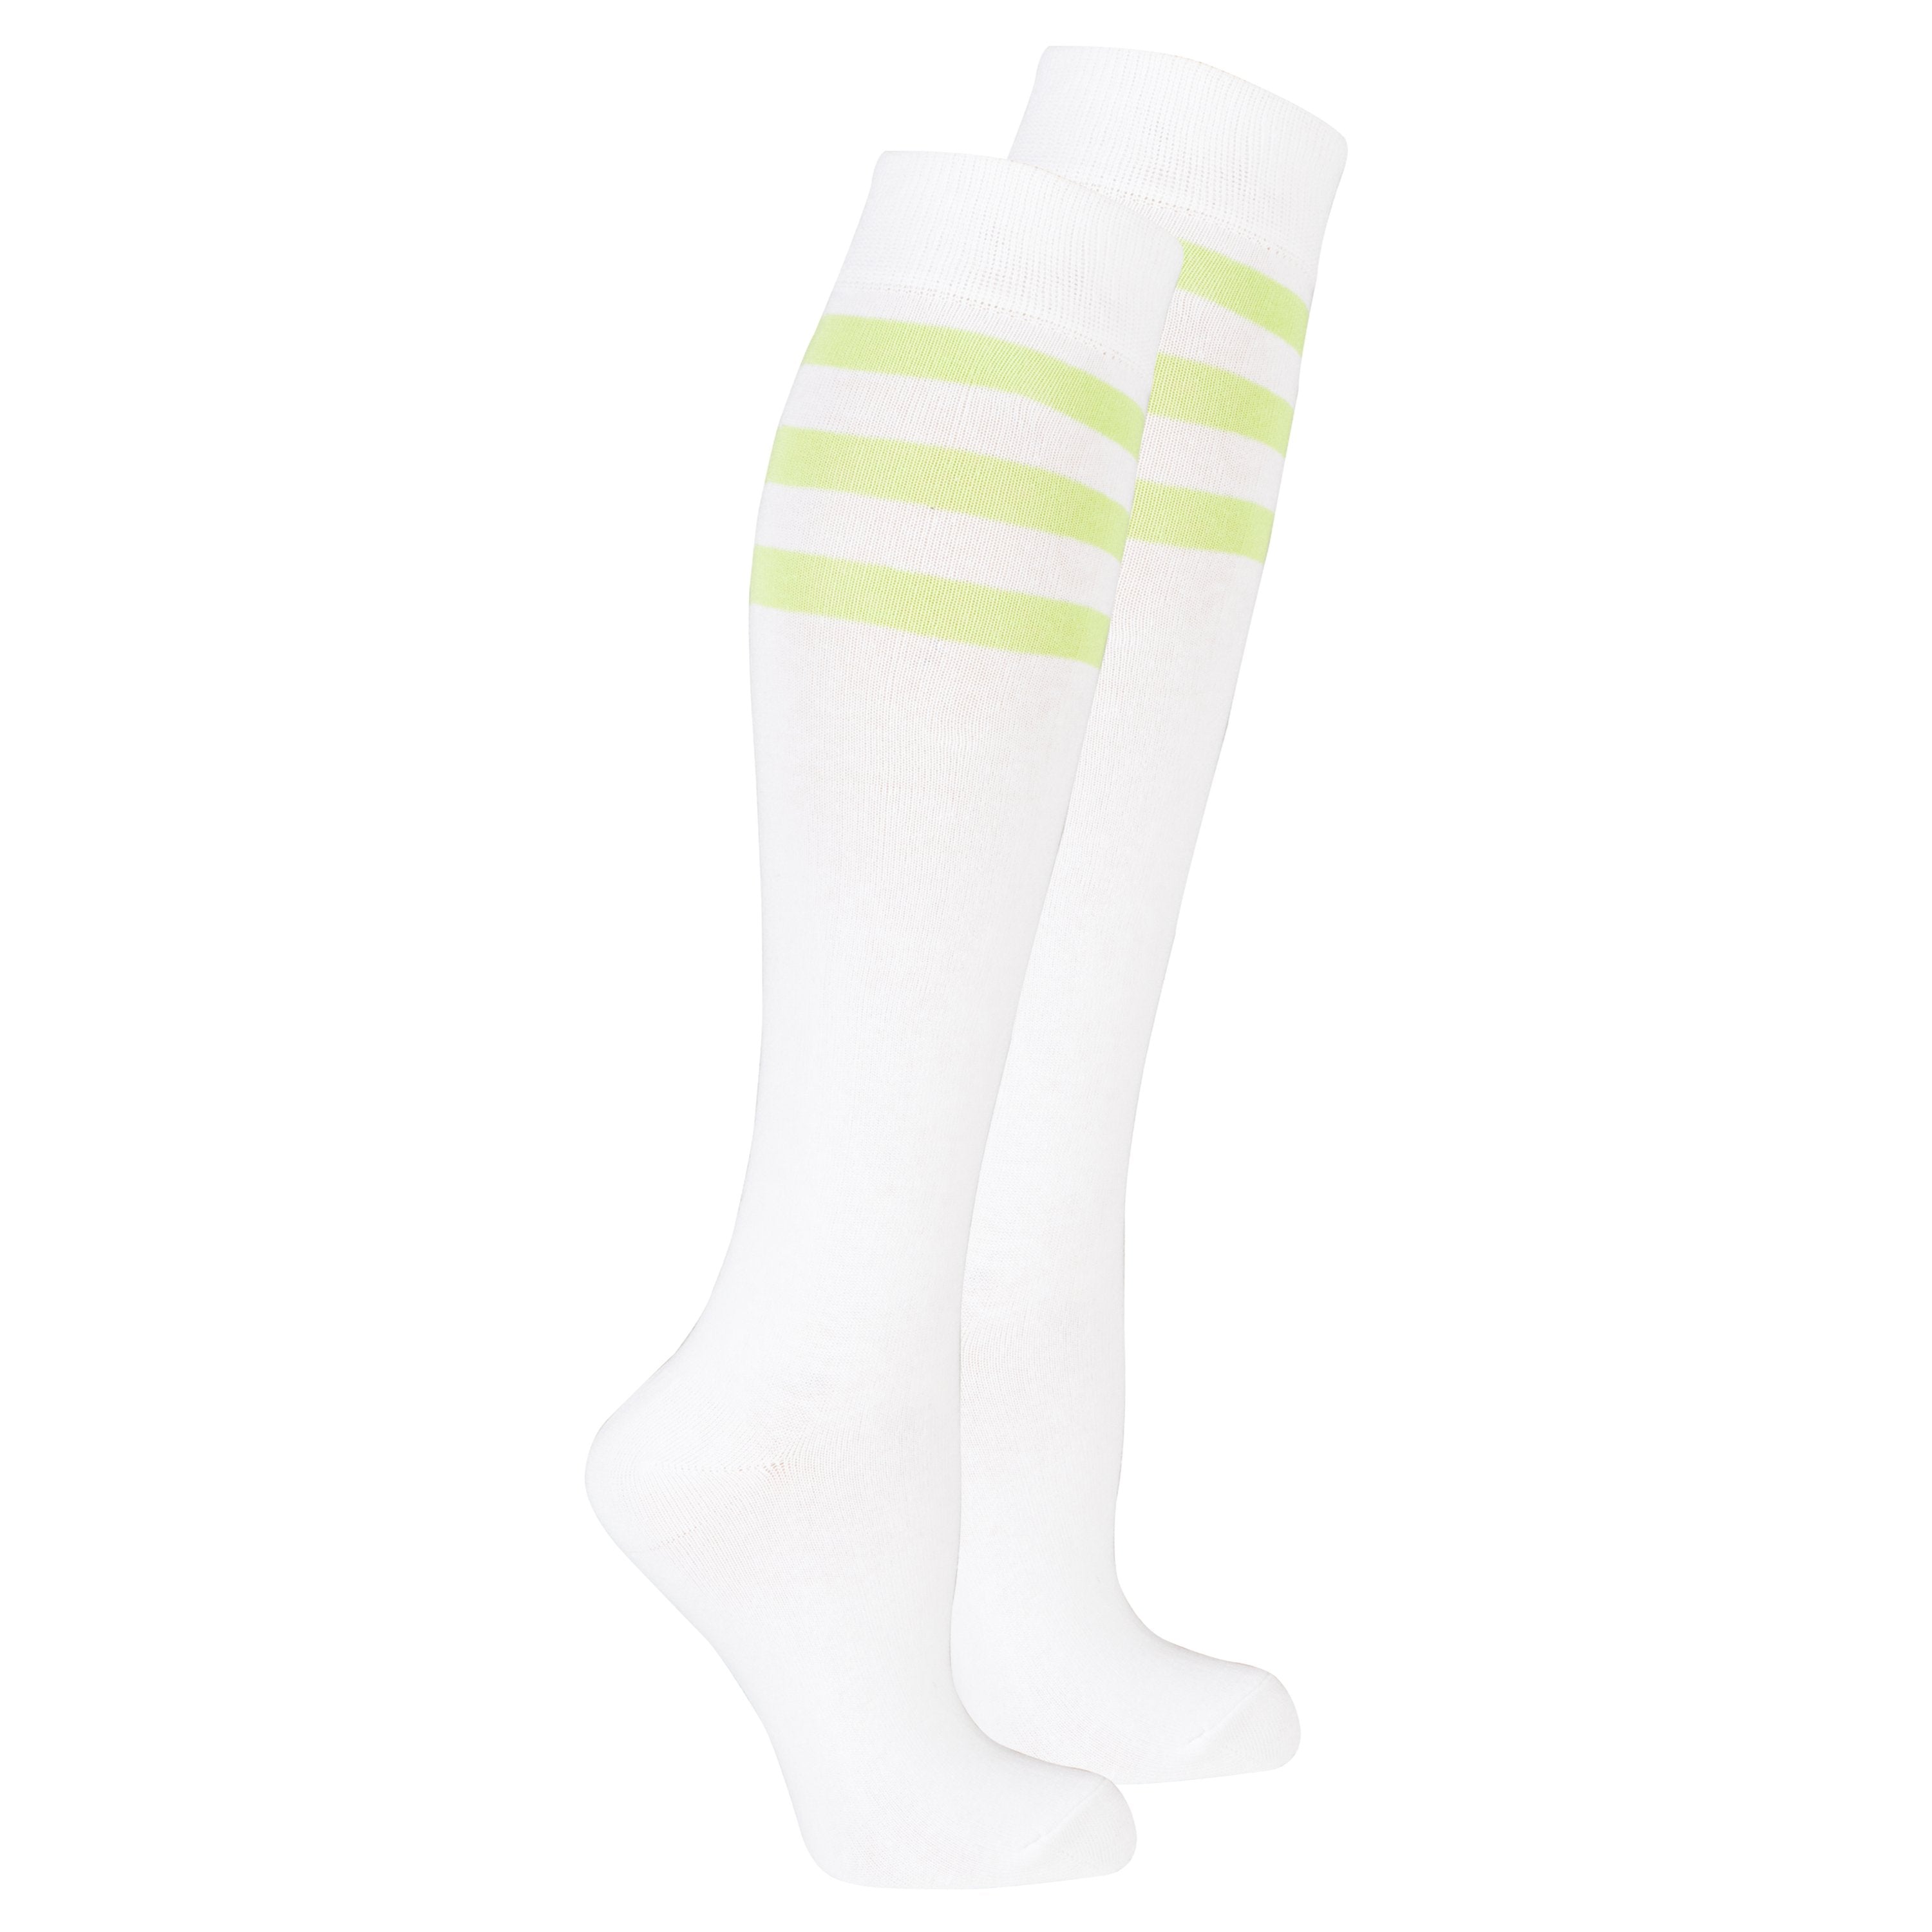 Solid Green Stripe Knee High Socks